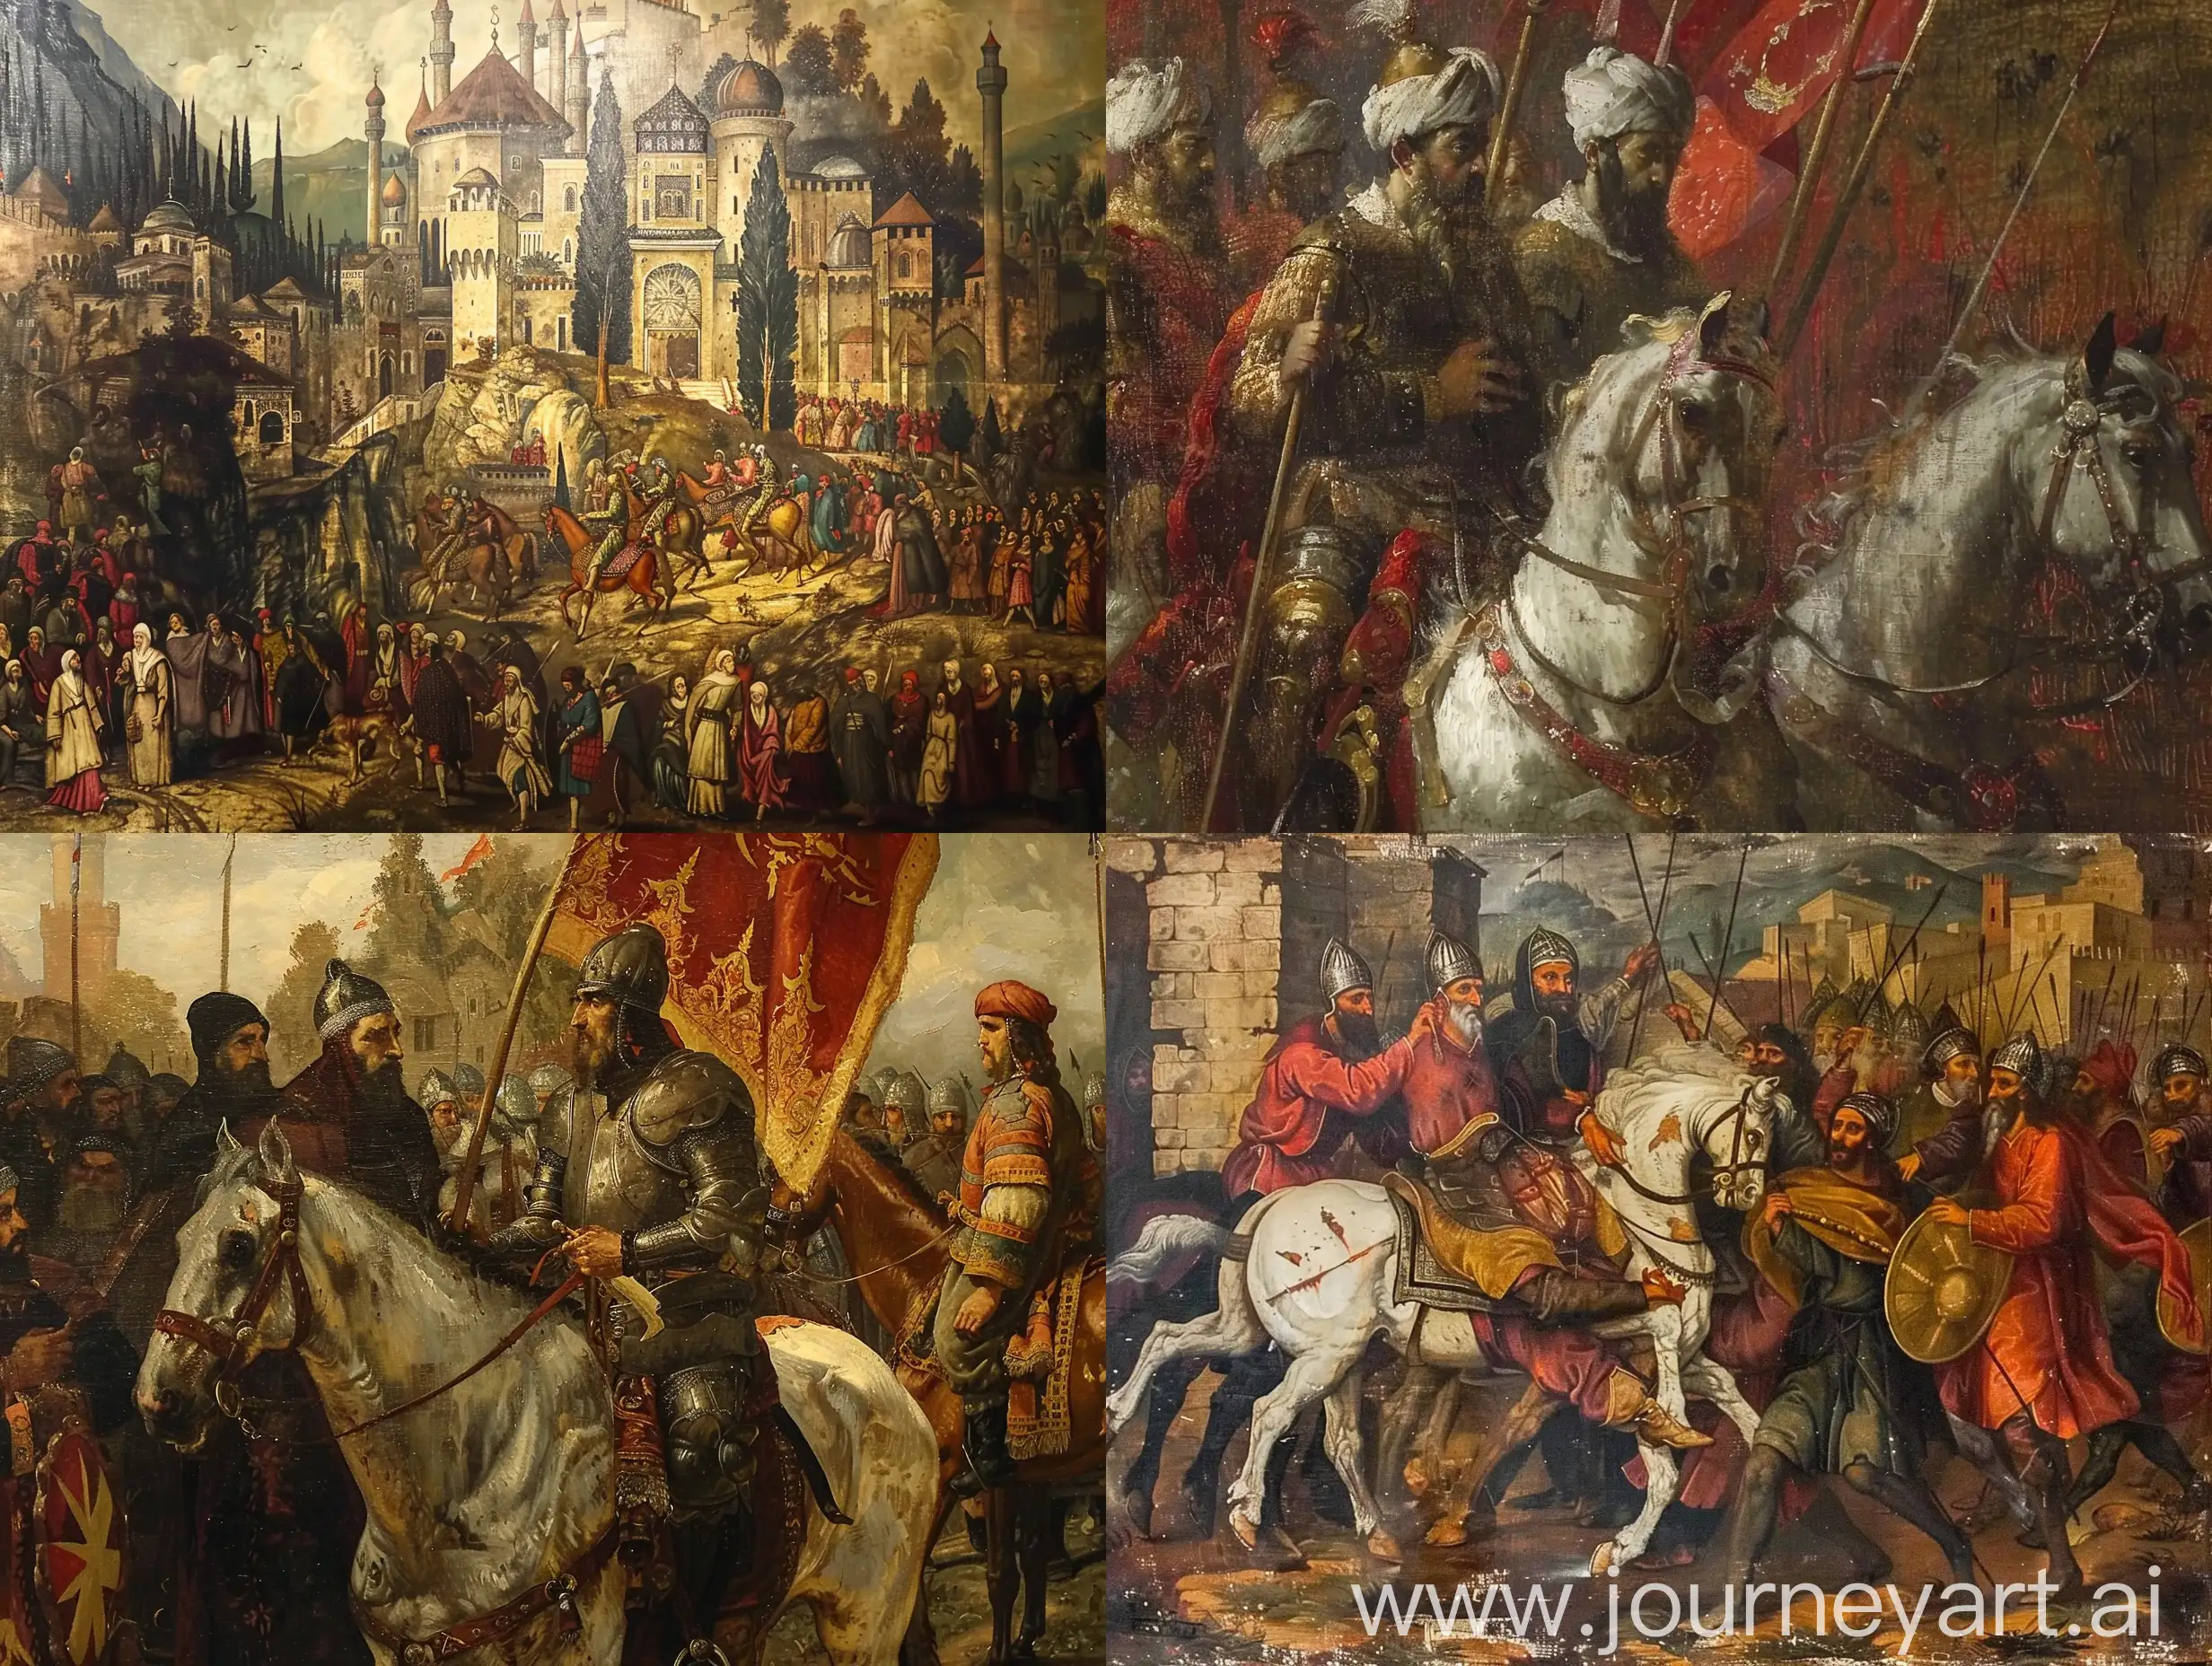 Balkan Turk genocide
Renaissance style, Leonardo Davinci style. Medieval oil painting.